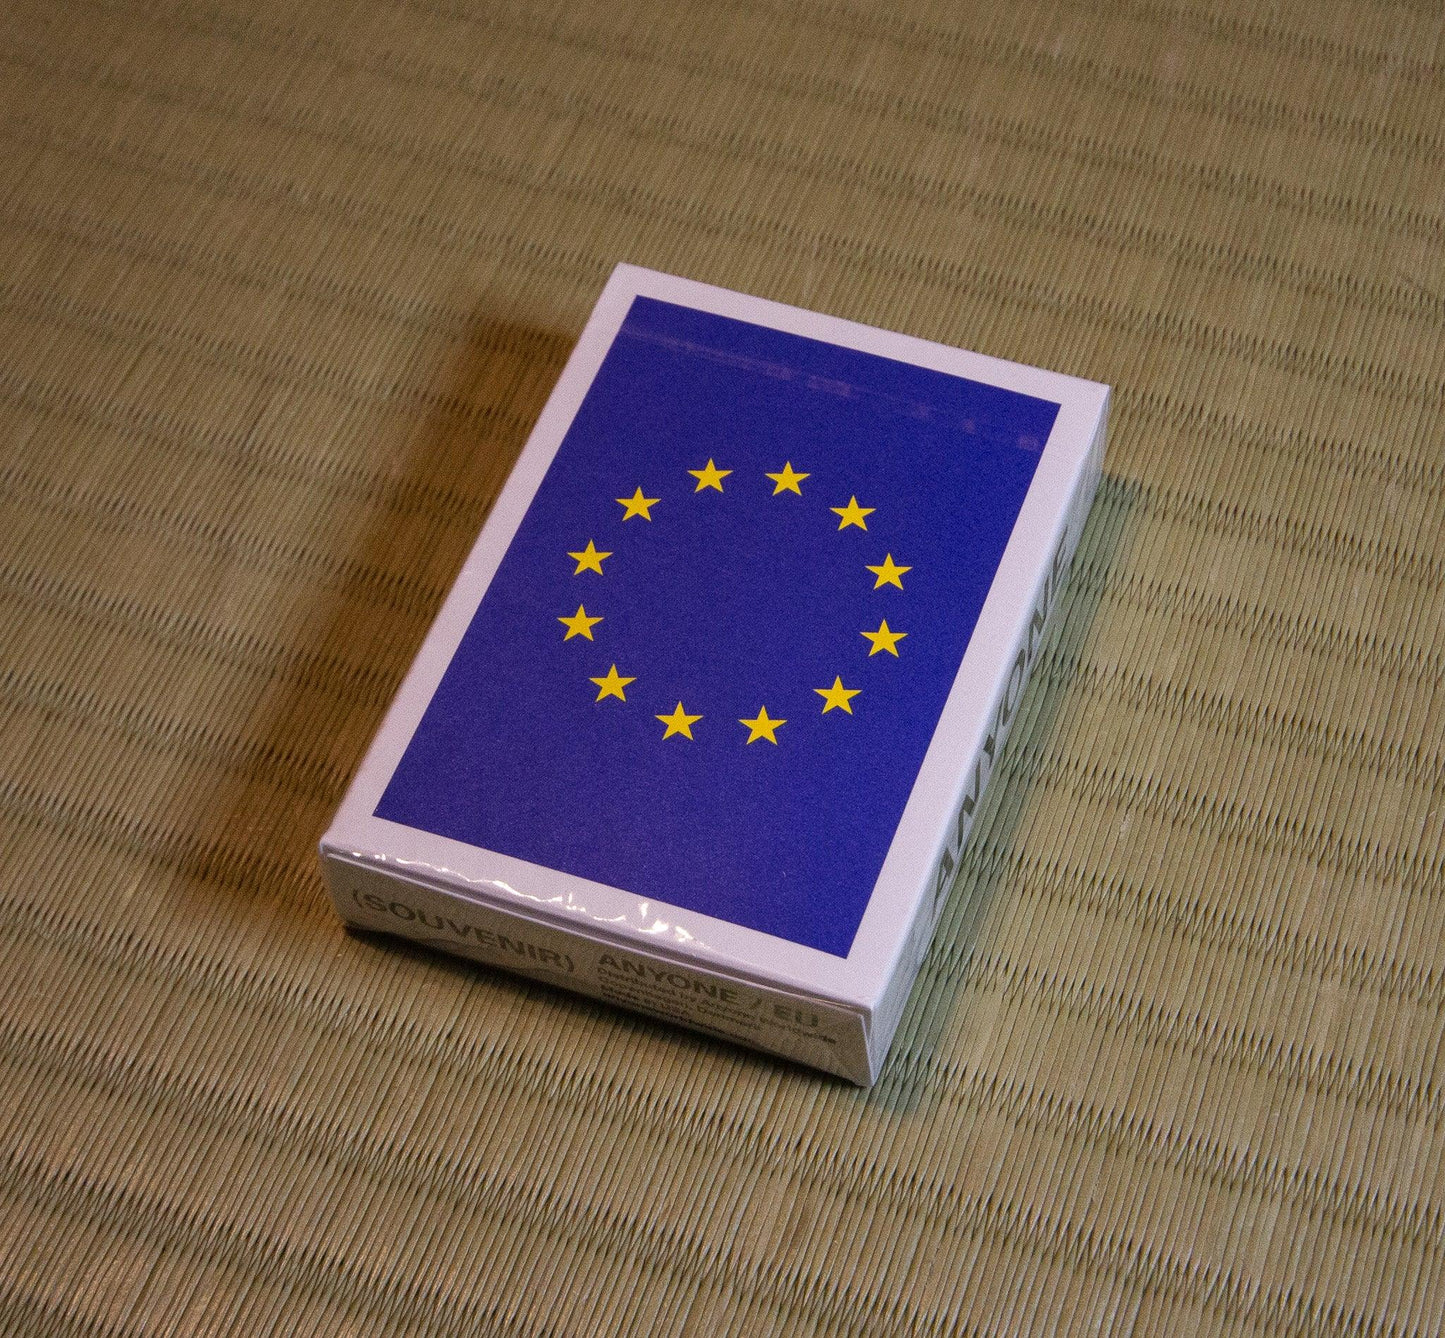 EU Souvenir Playing Cards by Anyone Worldwide - Deckita Decks